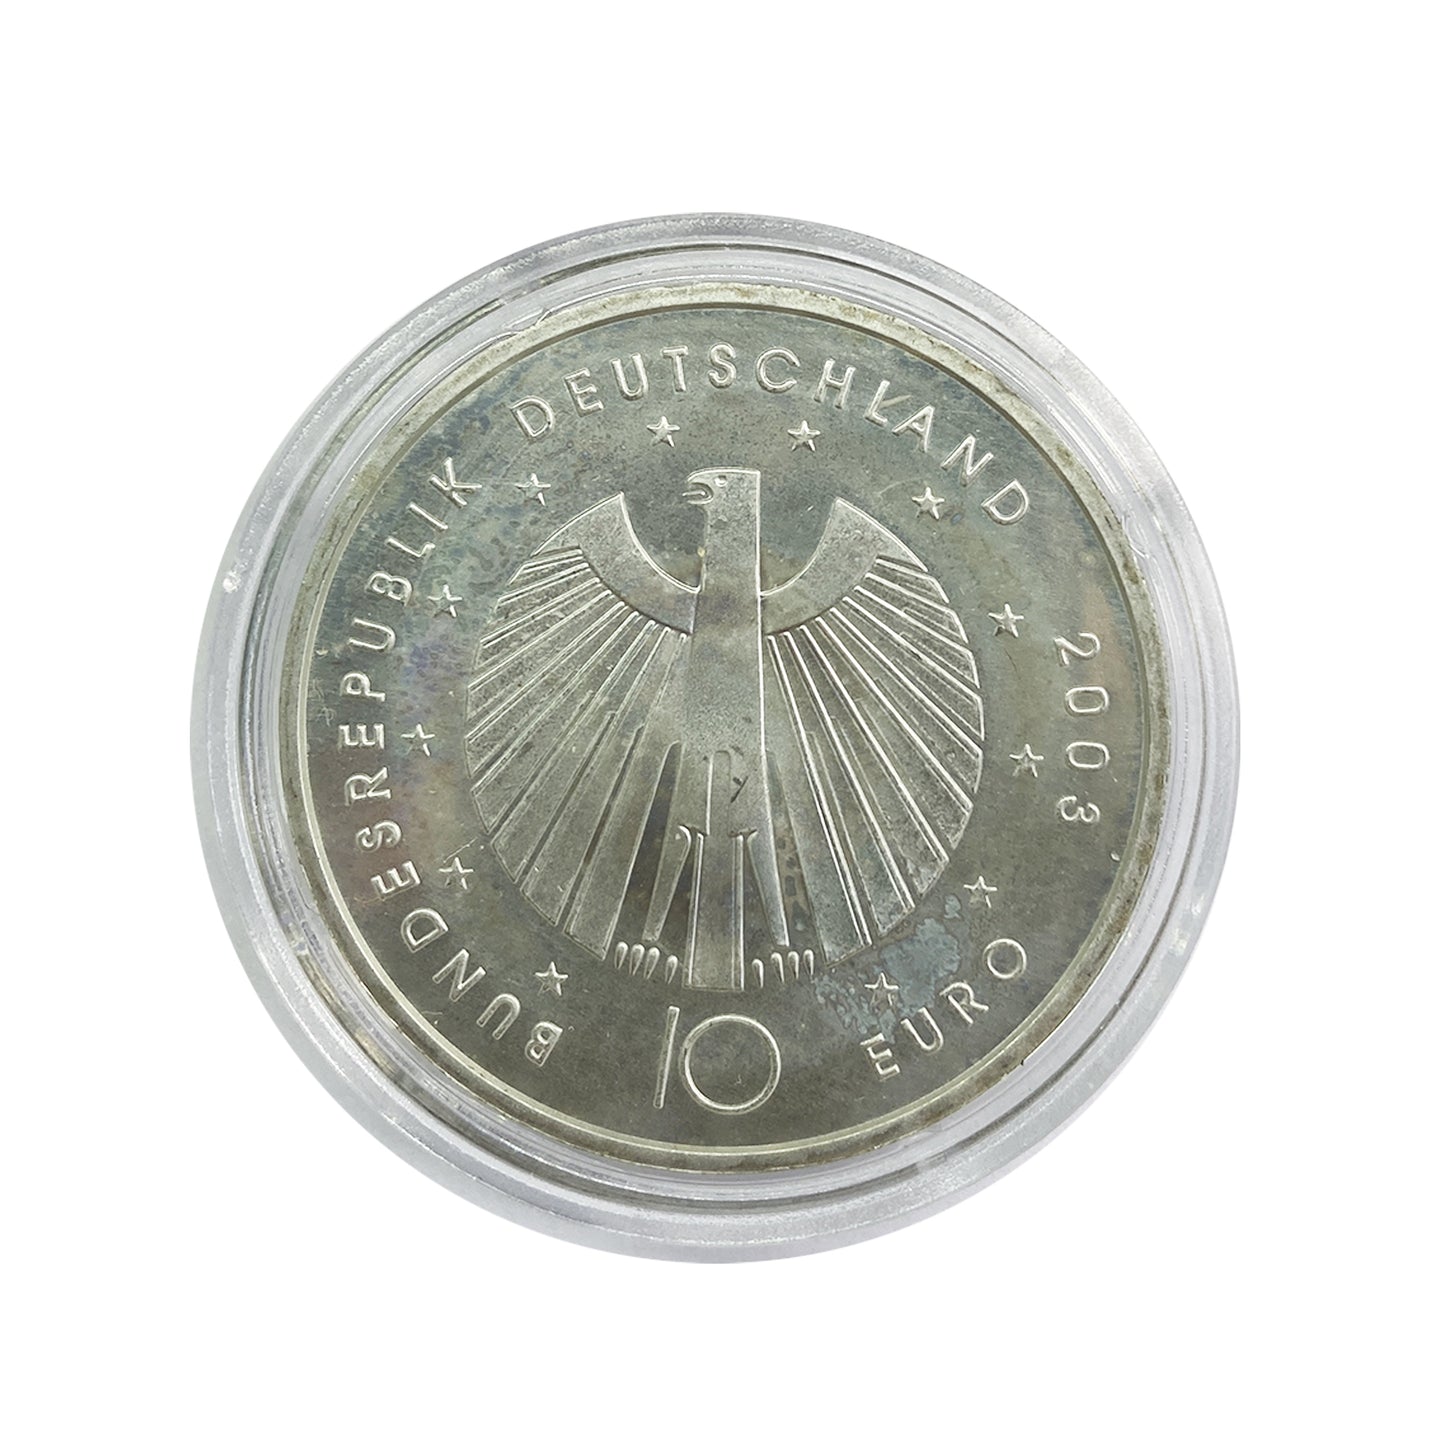 Alemania - Moneda 10 euros plata 2003 -  Copa del Mundo FIFA 2006